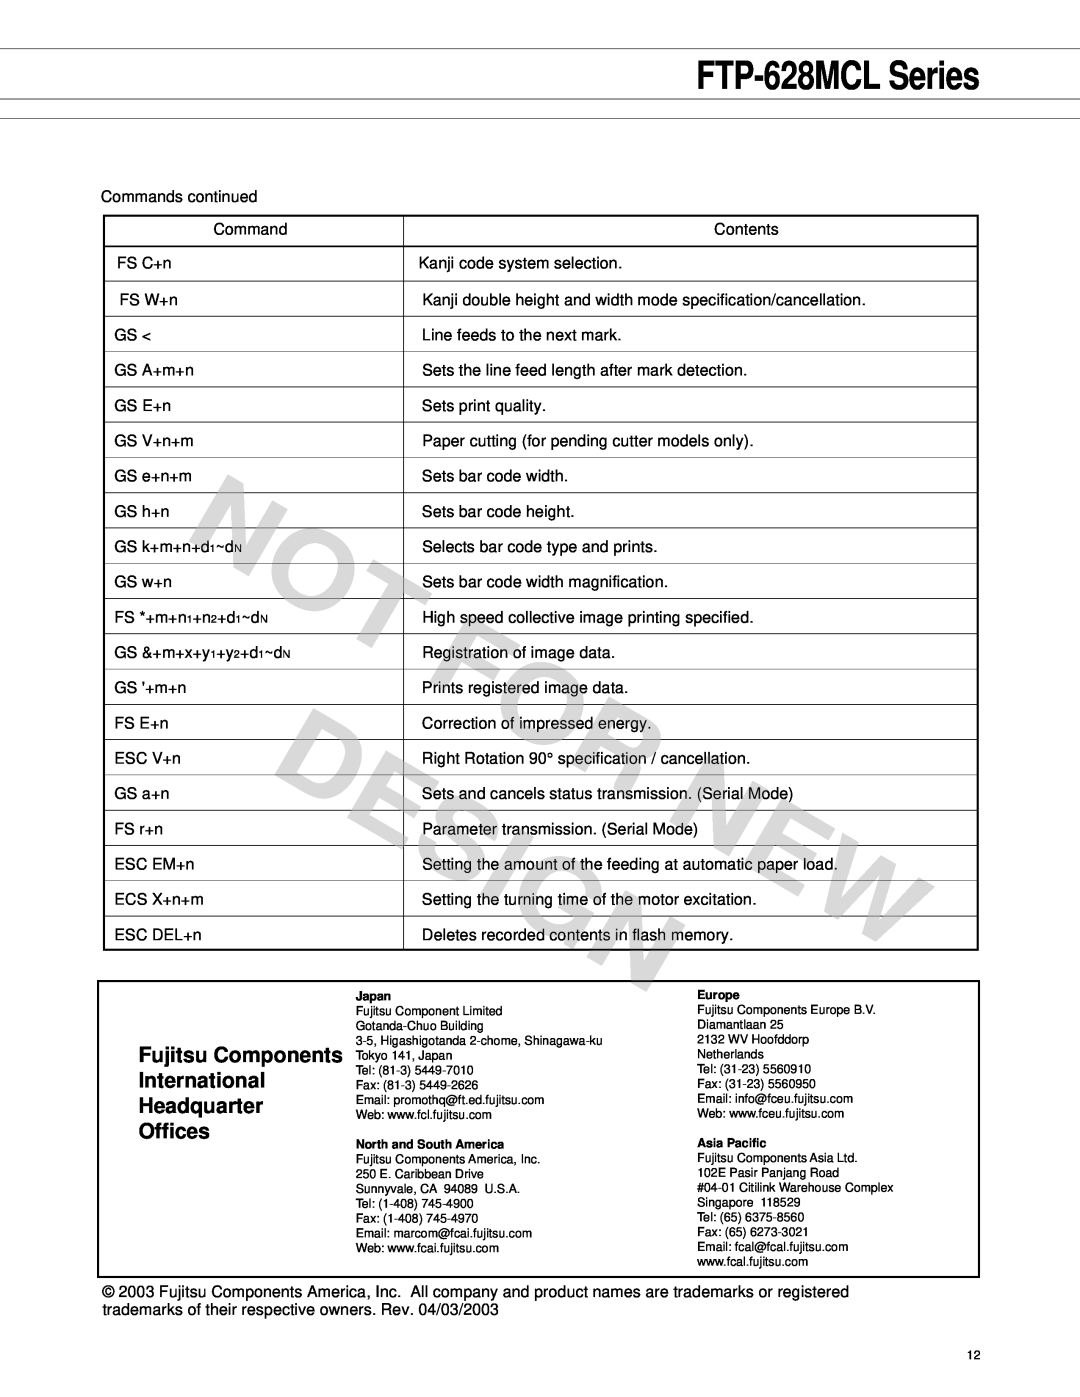 Fujitsu FTP-628 Series manual FTP-628MCL Series, Contents Kanji code system selection 